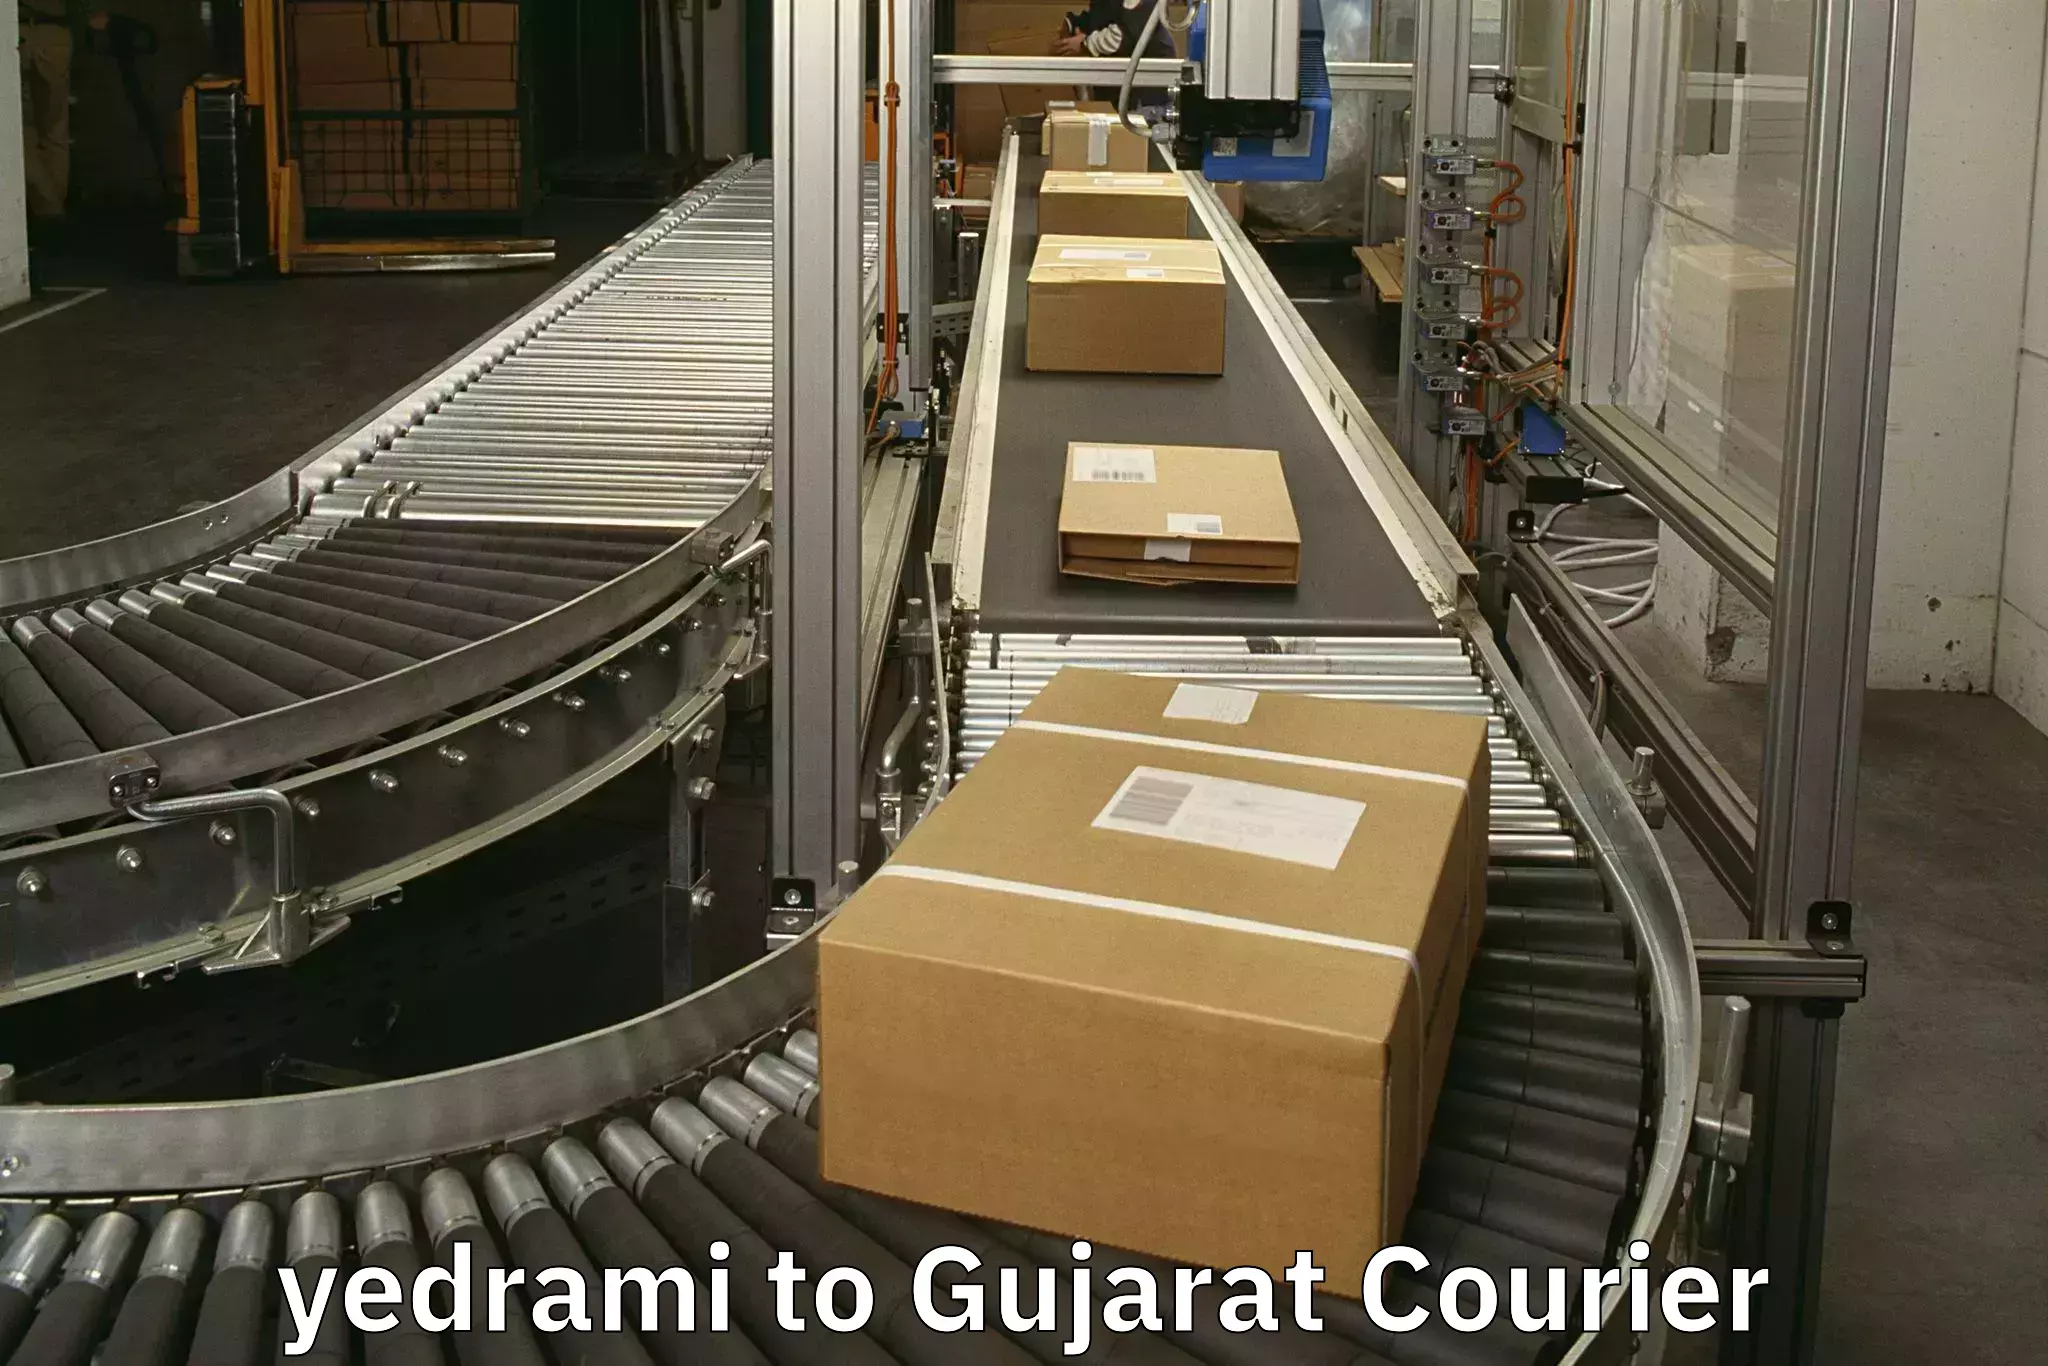 Hassle-free luggage shipping yedrami to Gujarat